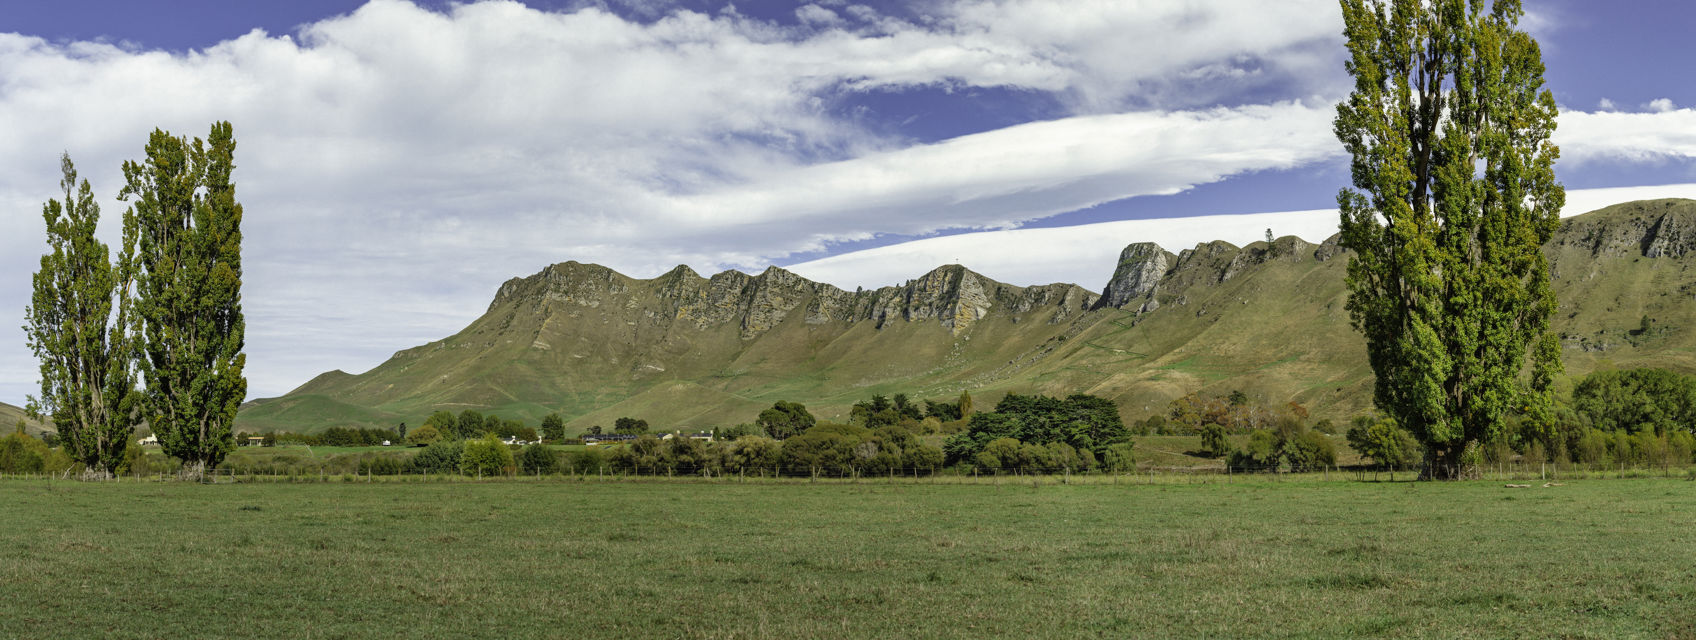 Te Mata Peak & Range From Tukituki Road - The range and farmland viewed from Tukituki Road